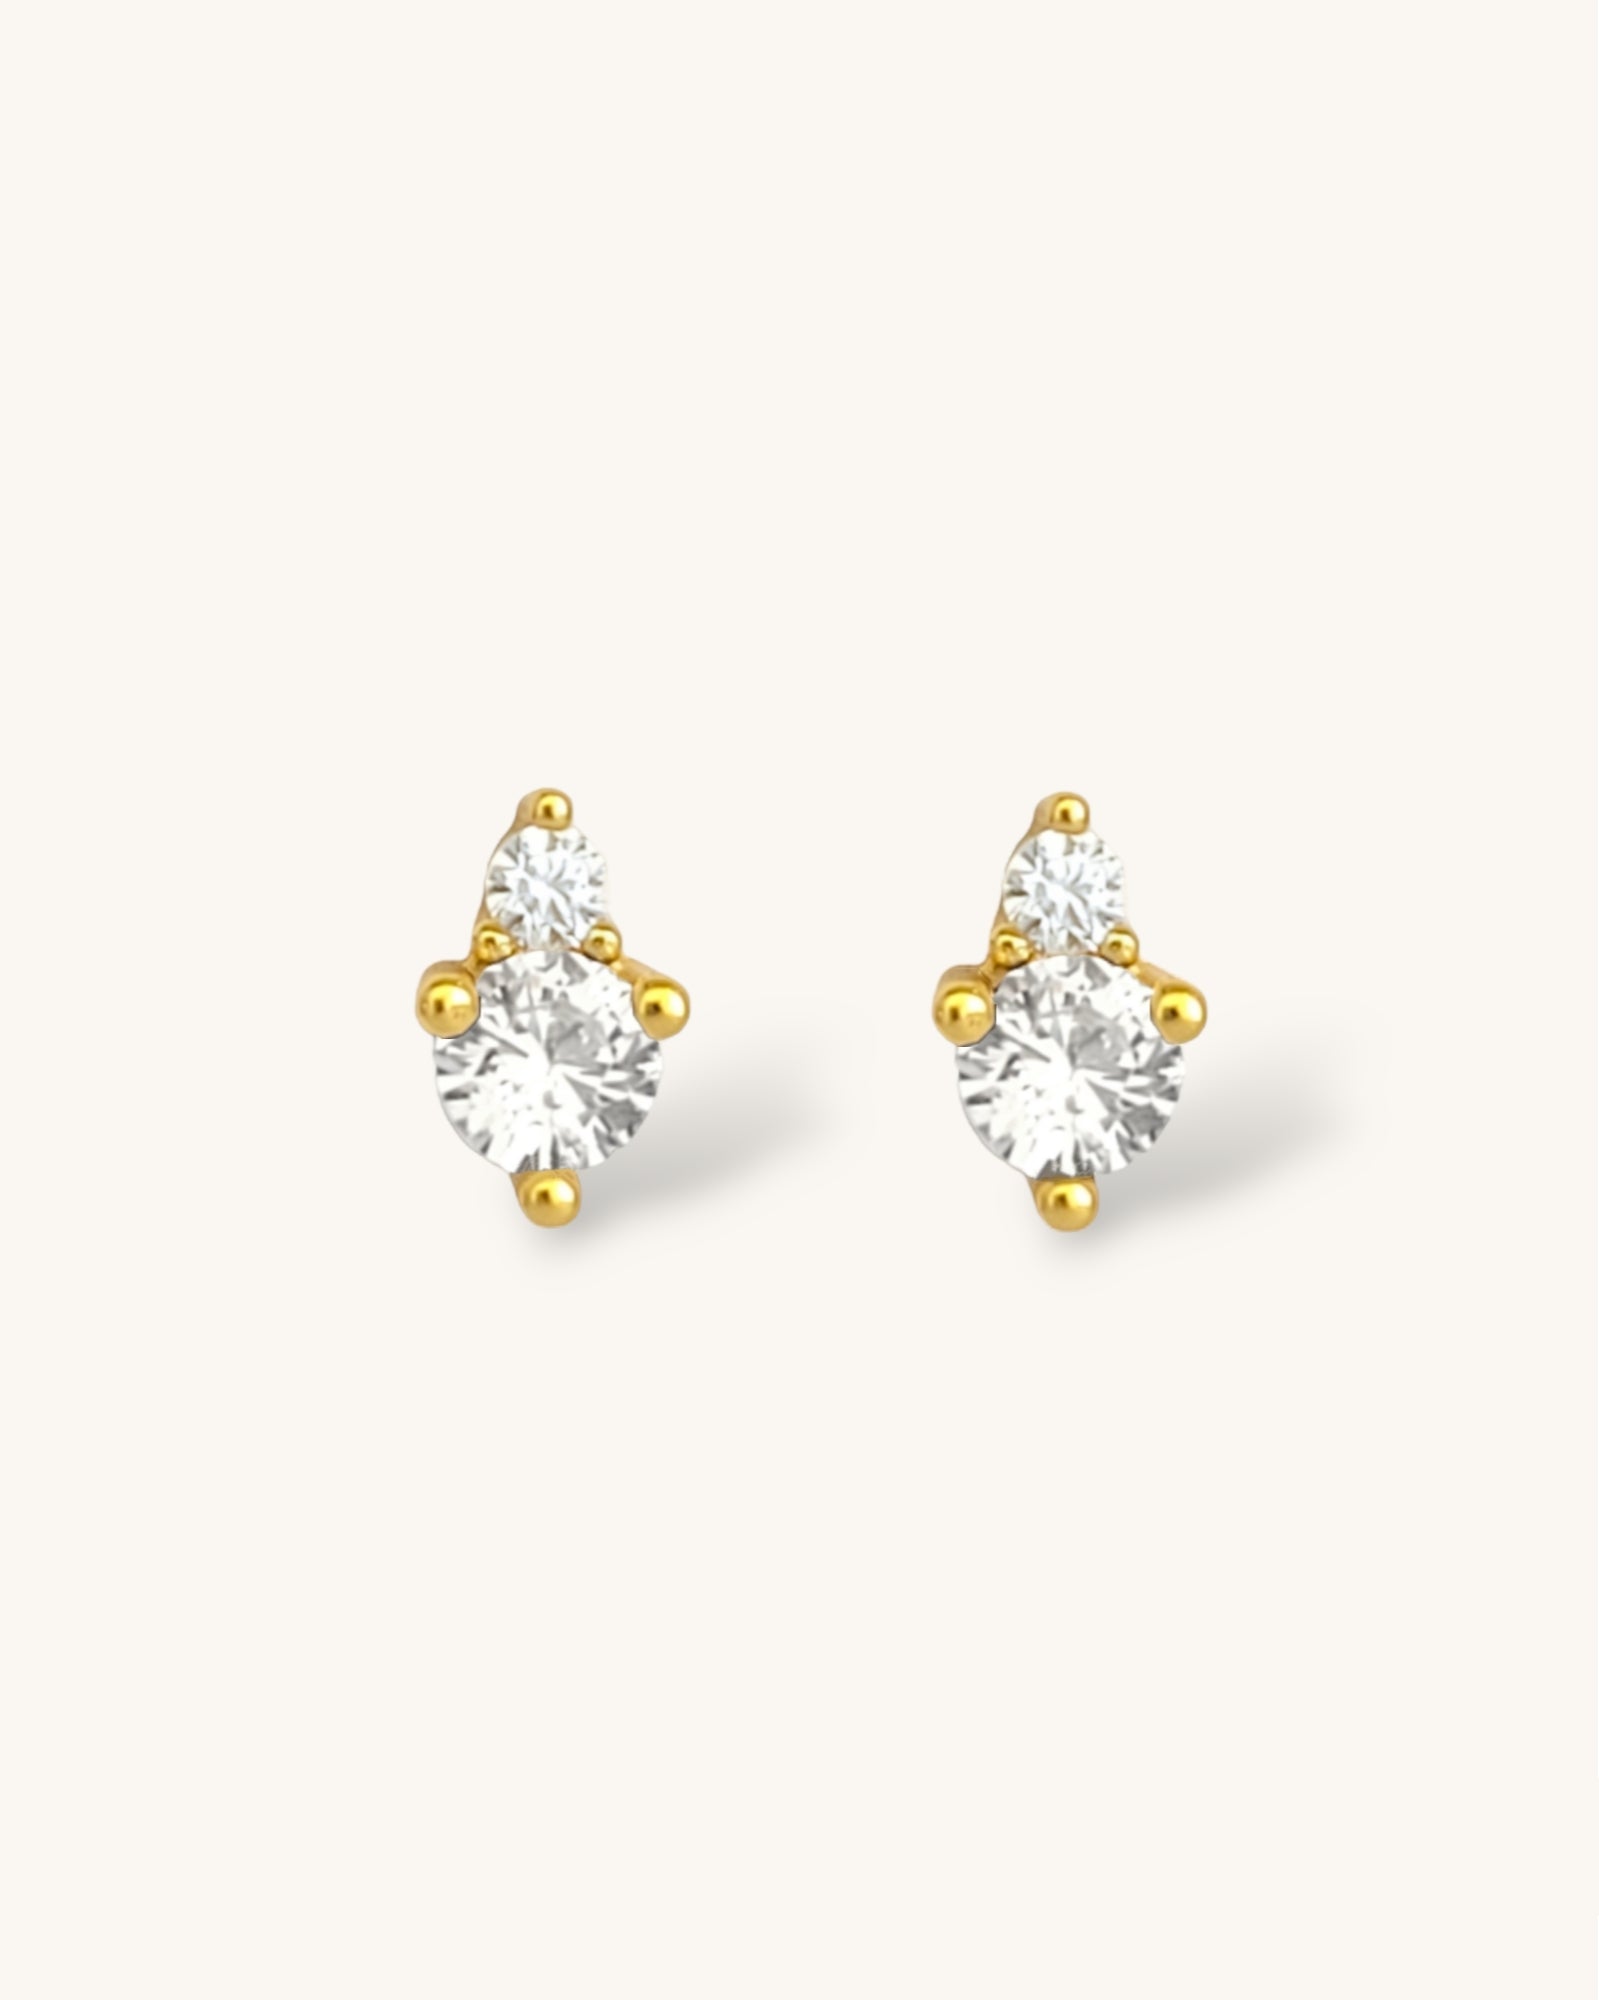 White Topaz Birthstone Stud Earrings in 14k Yellow Gold (April) - Pair (TWO  EARRINGS)